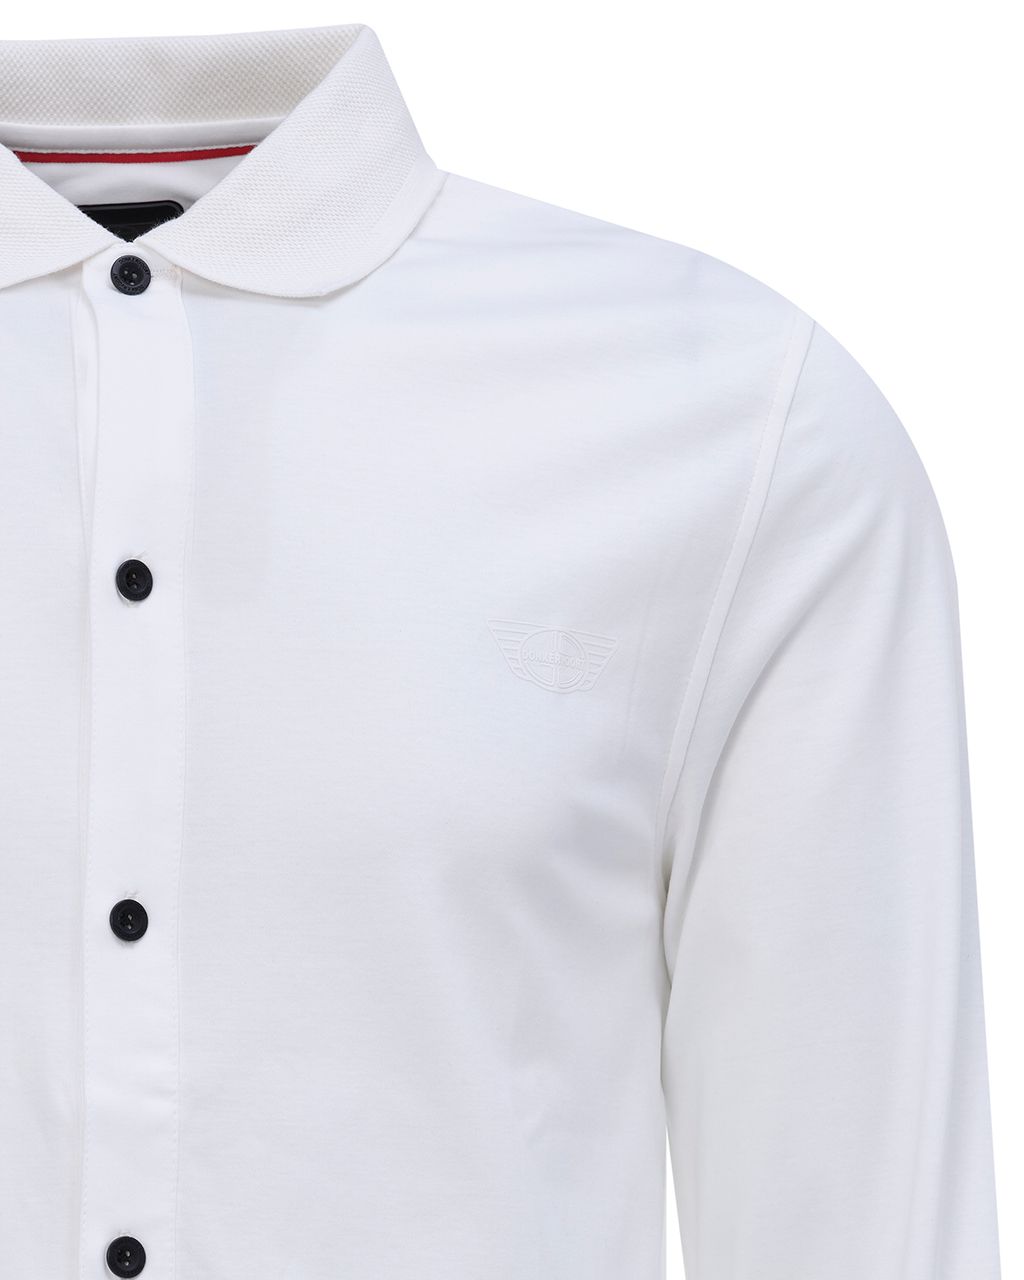 Donkervoort Casual Overhemd LM Wit uni 071768-002-L